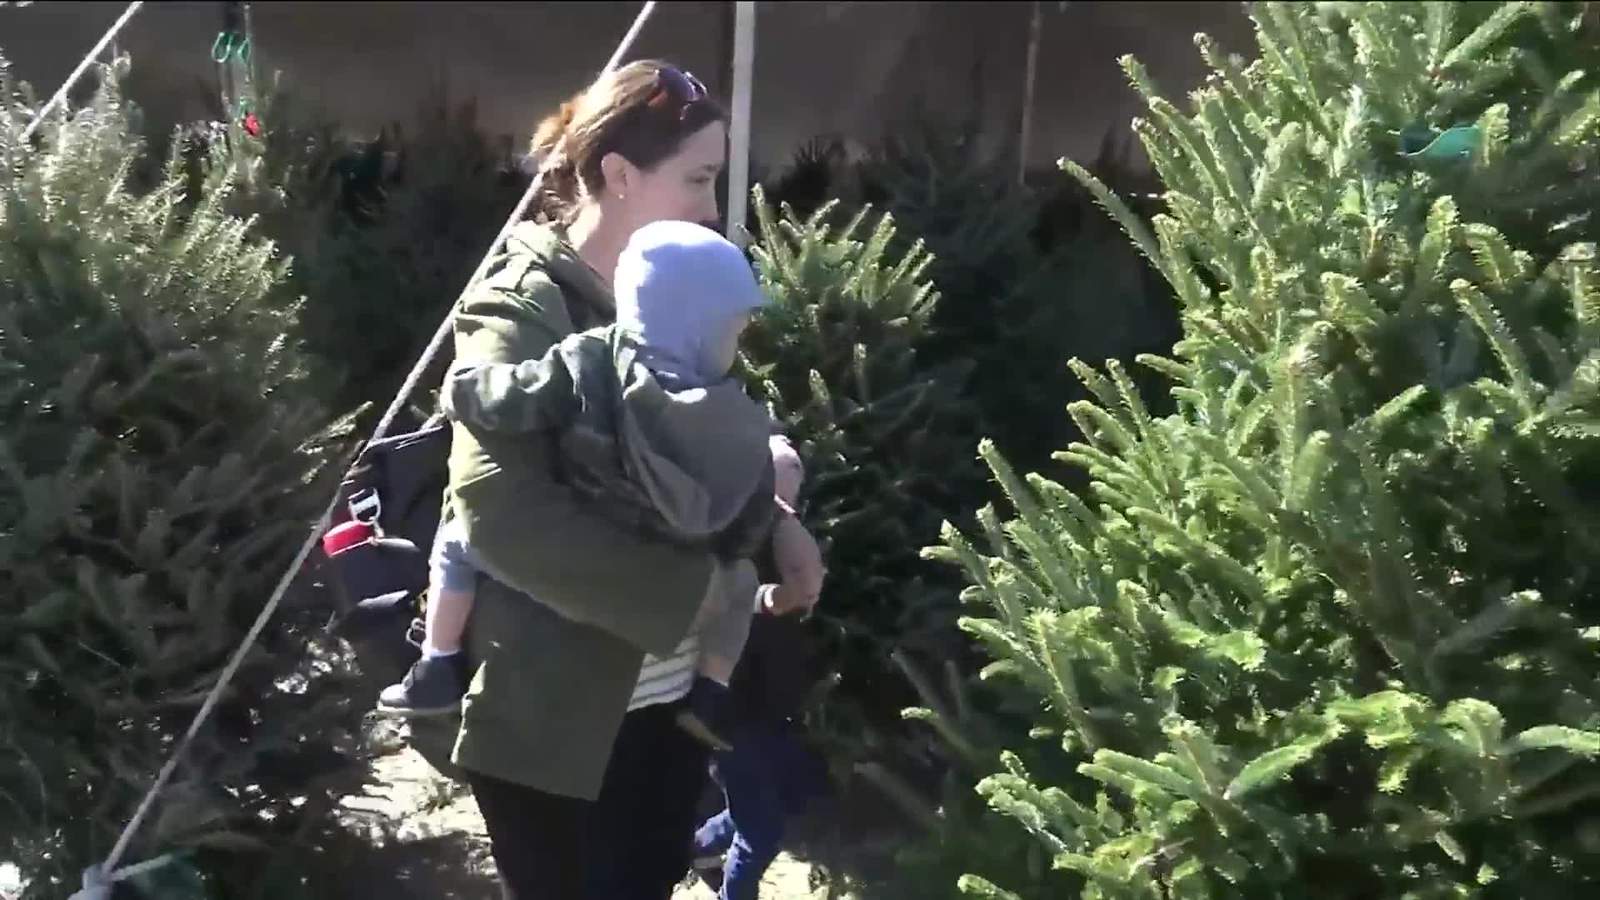 National Christmas tree shortage hits Jacksonville businesses